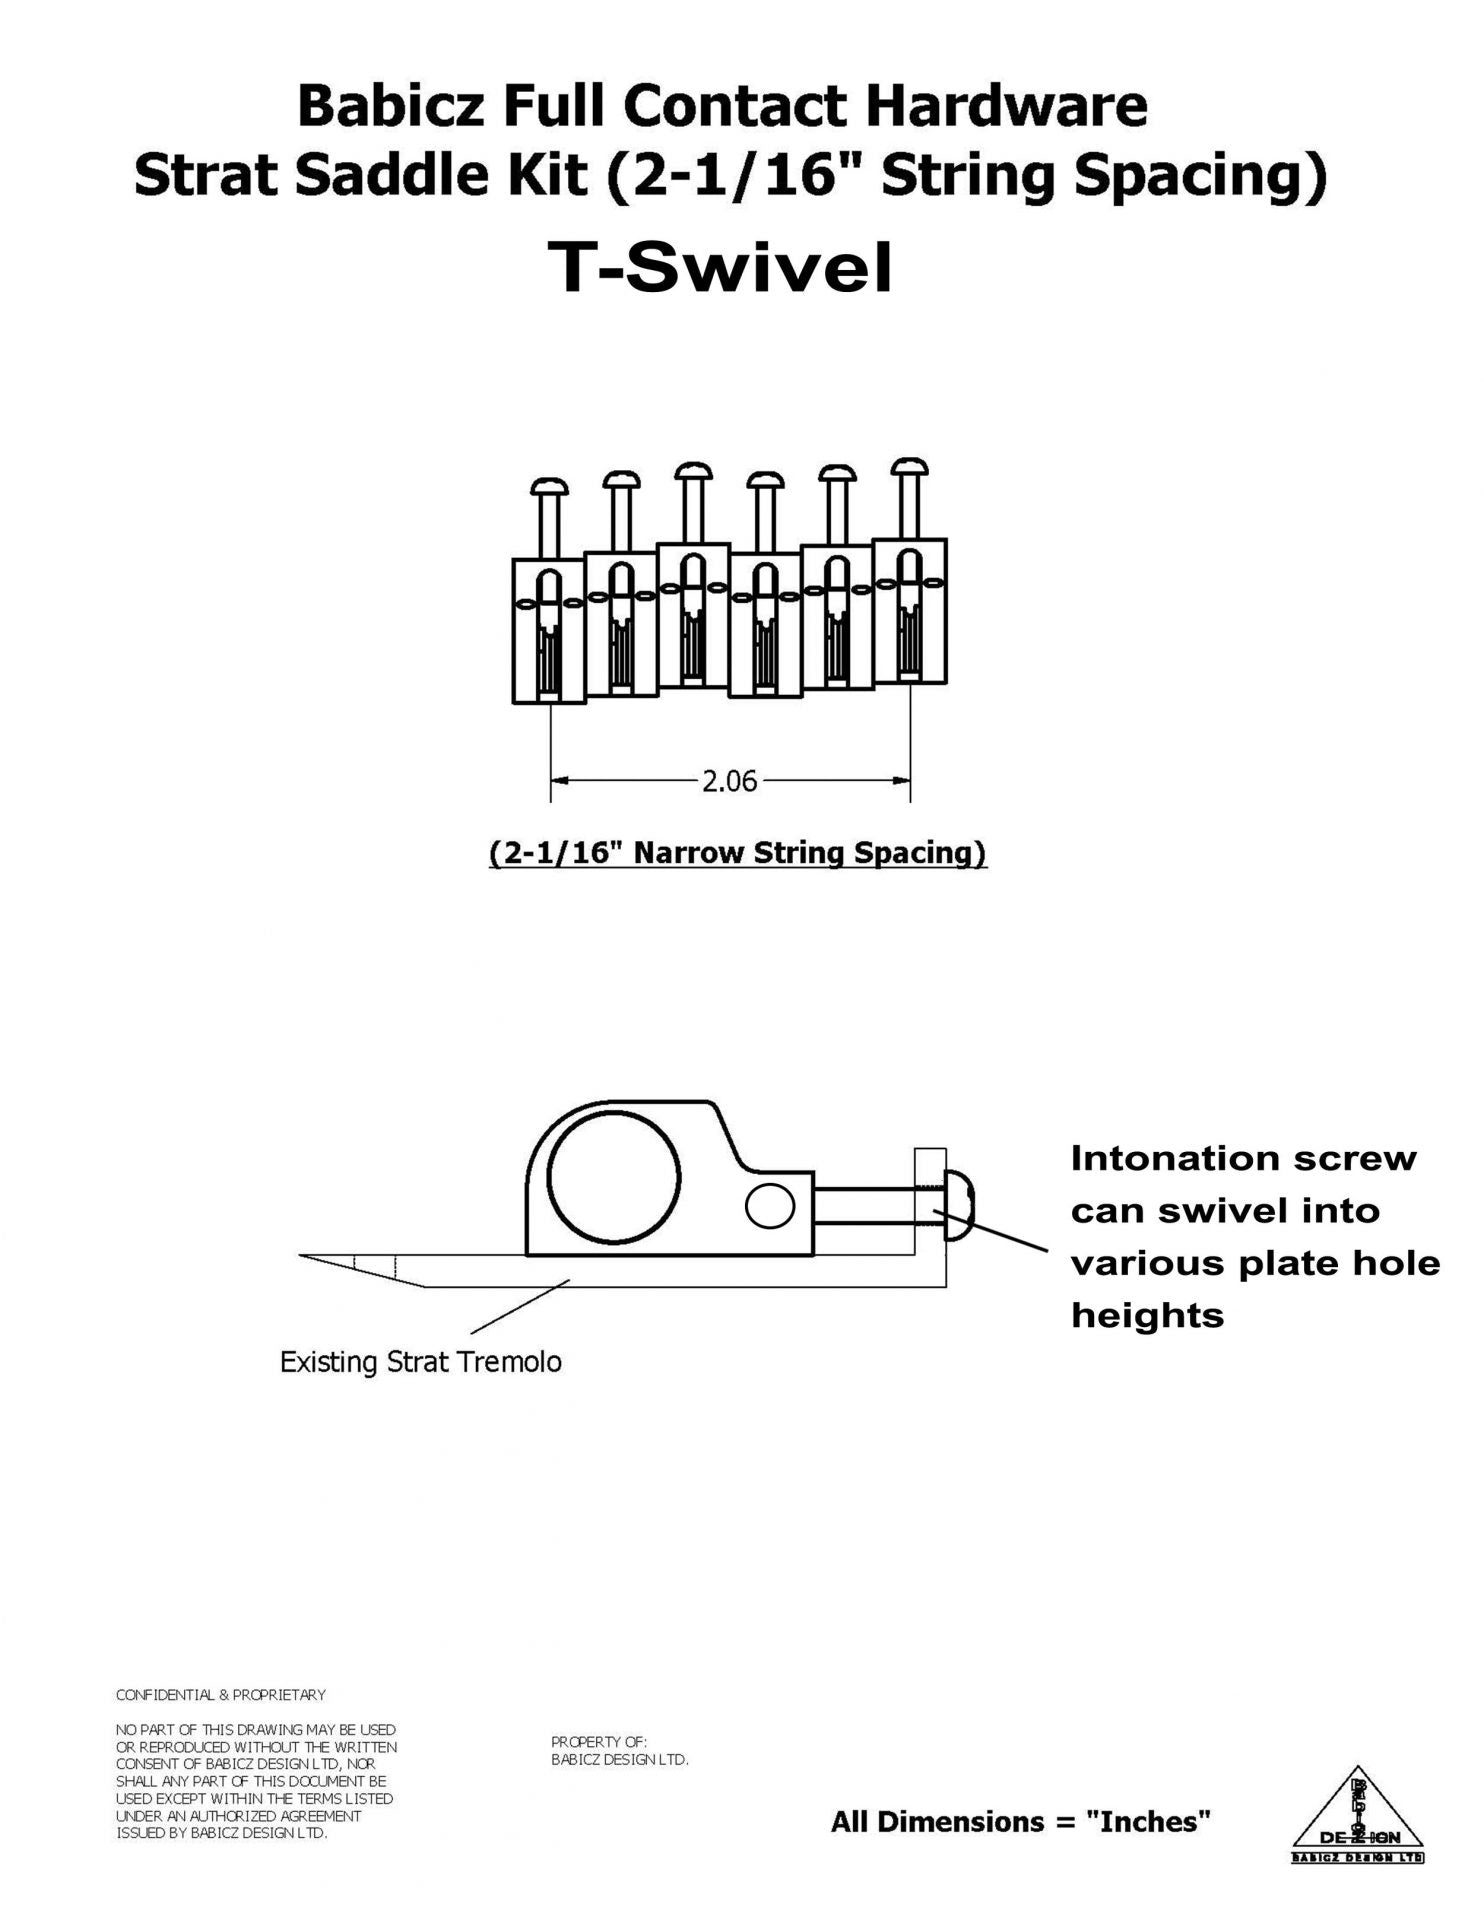 Babicz FCH T-Swivel Saddle Kit Dimensions